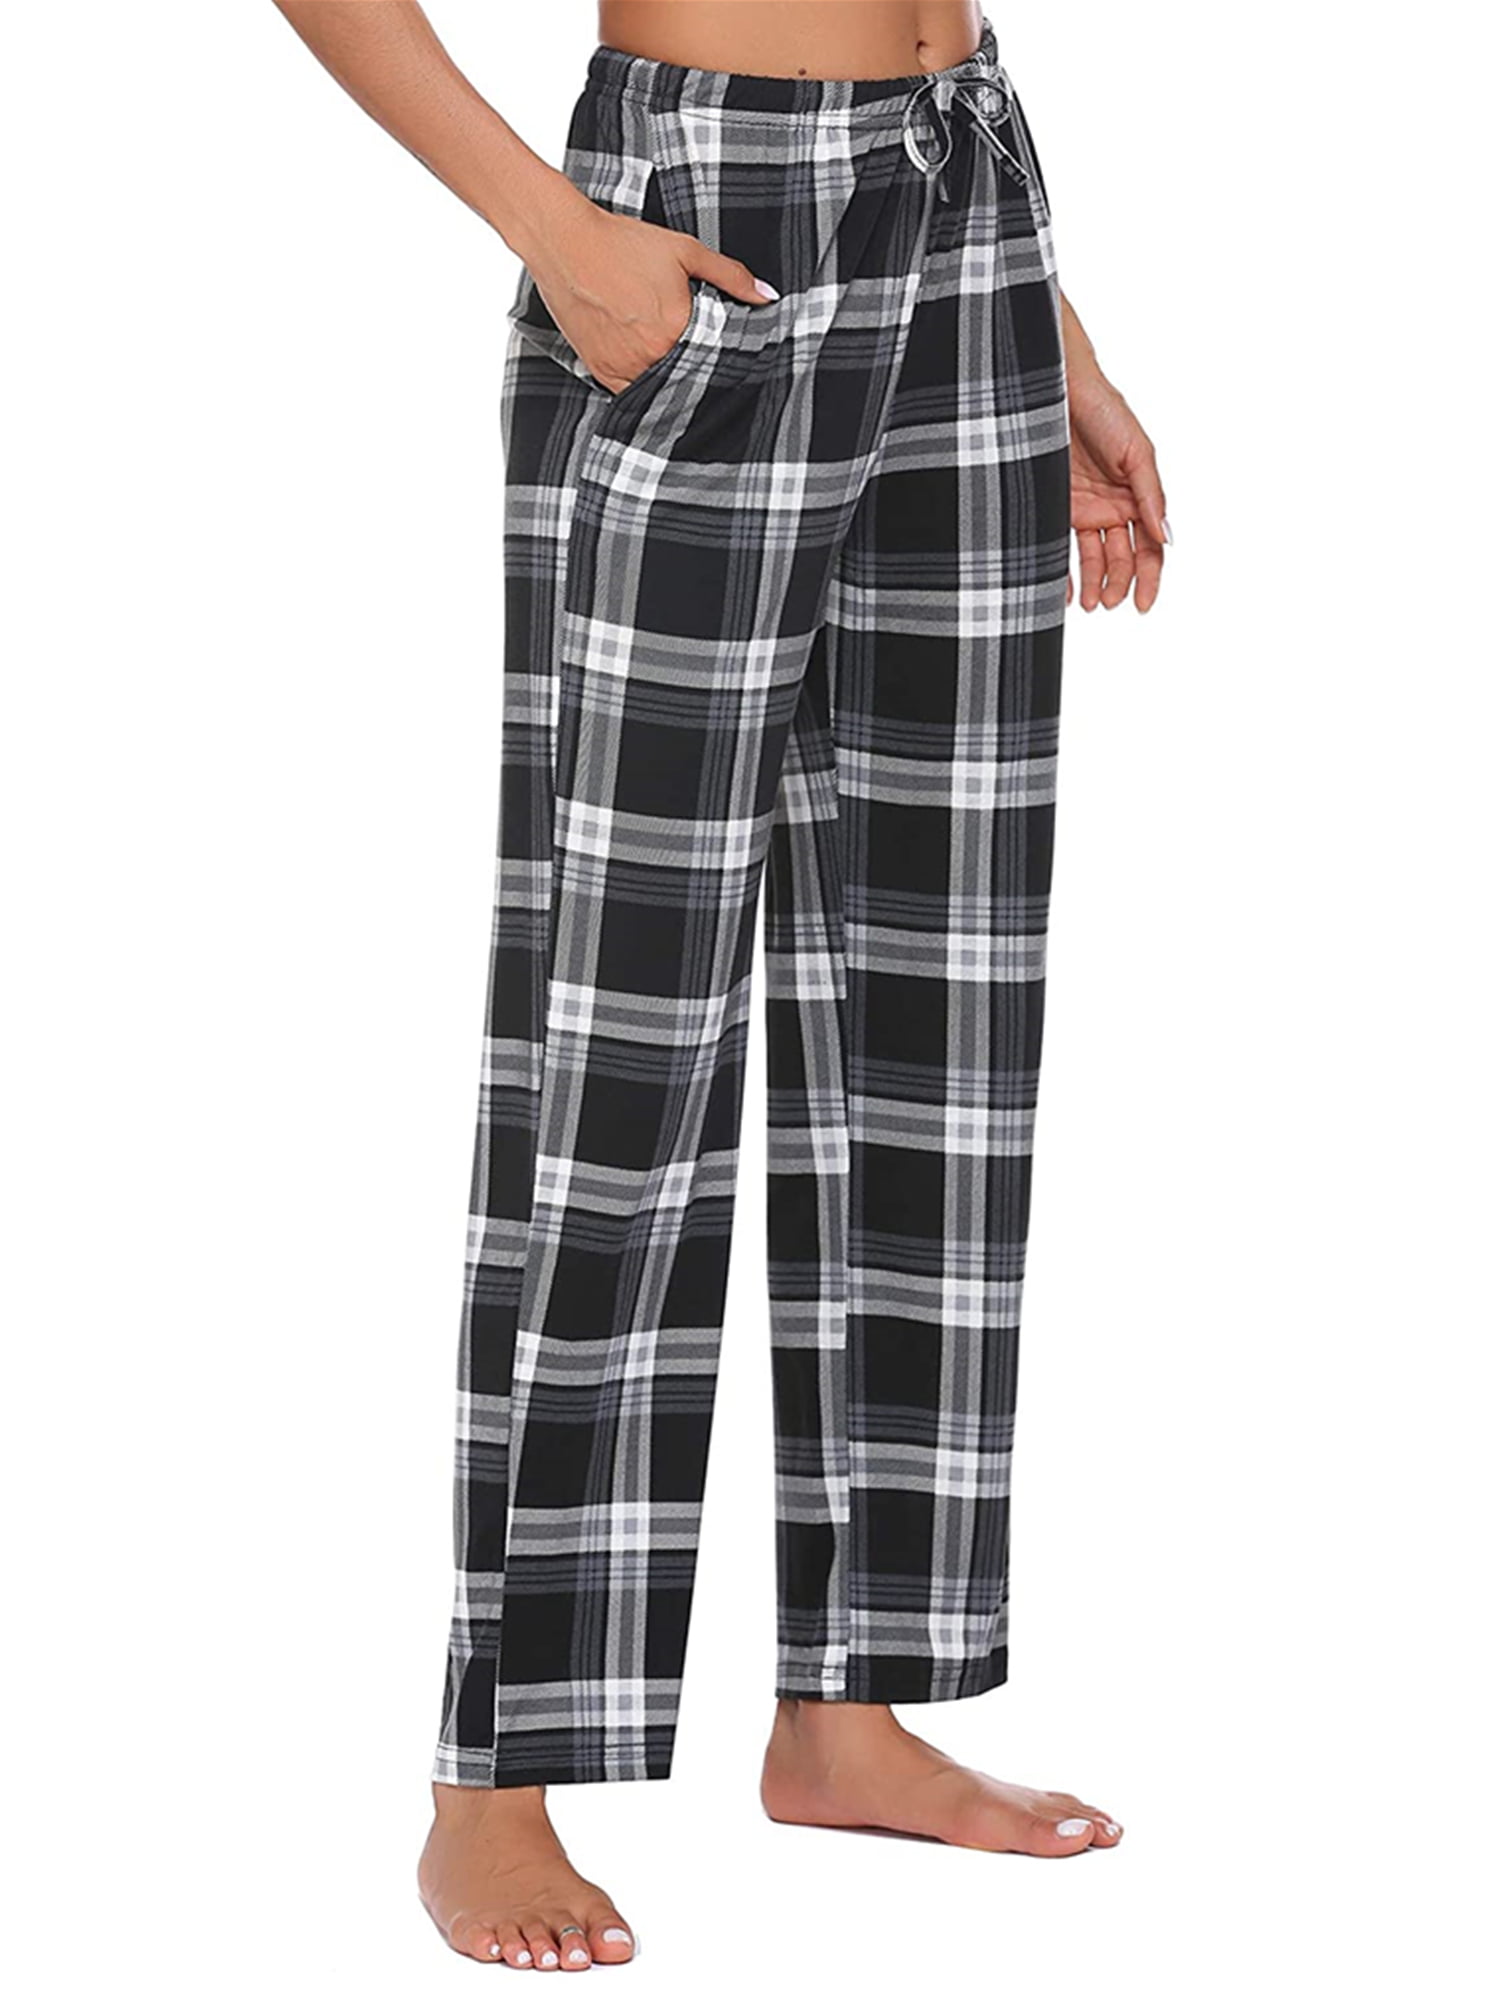 Yeyamei Women Buffalo Plaid Pajama Pants Loose Drawstring Sleepwear Bottom Loungewear Pants for Women 